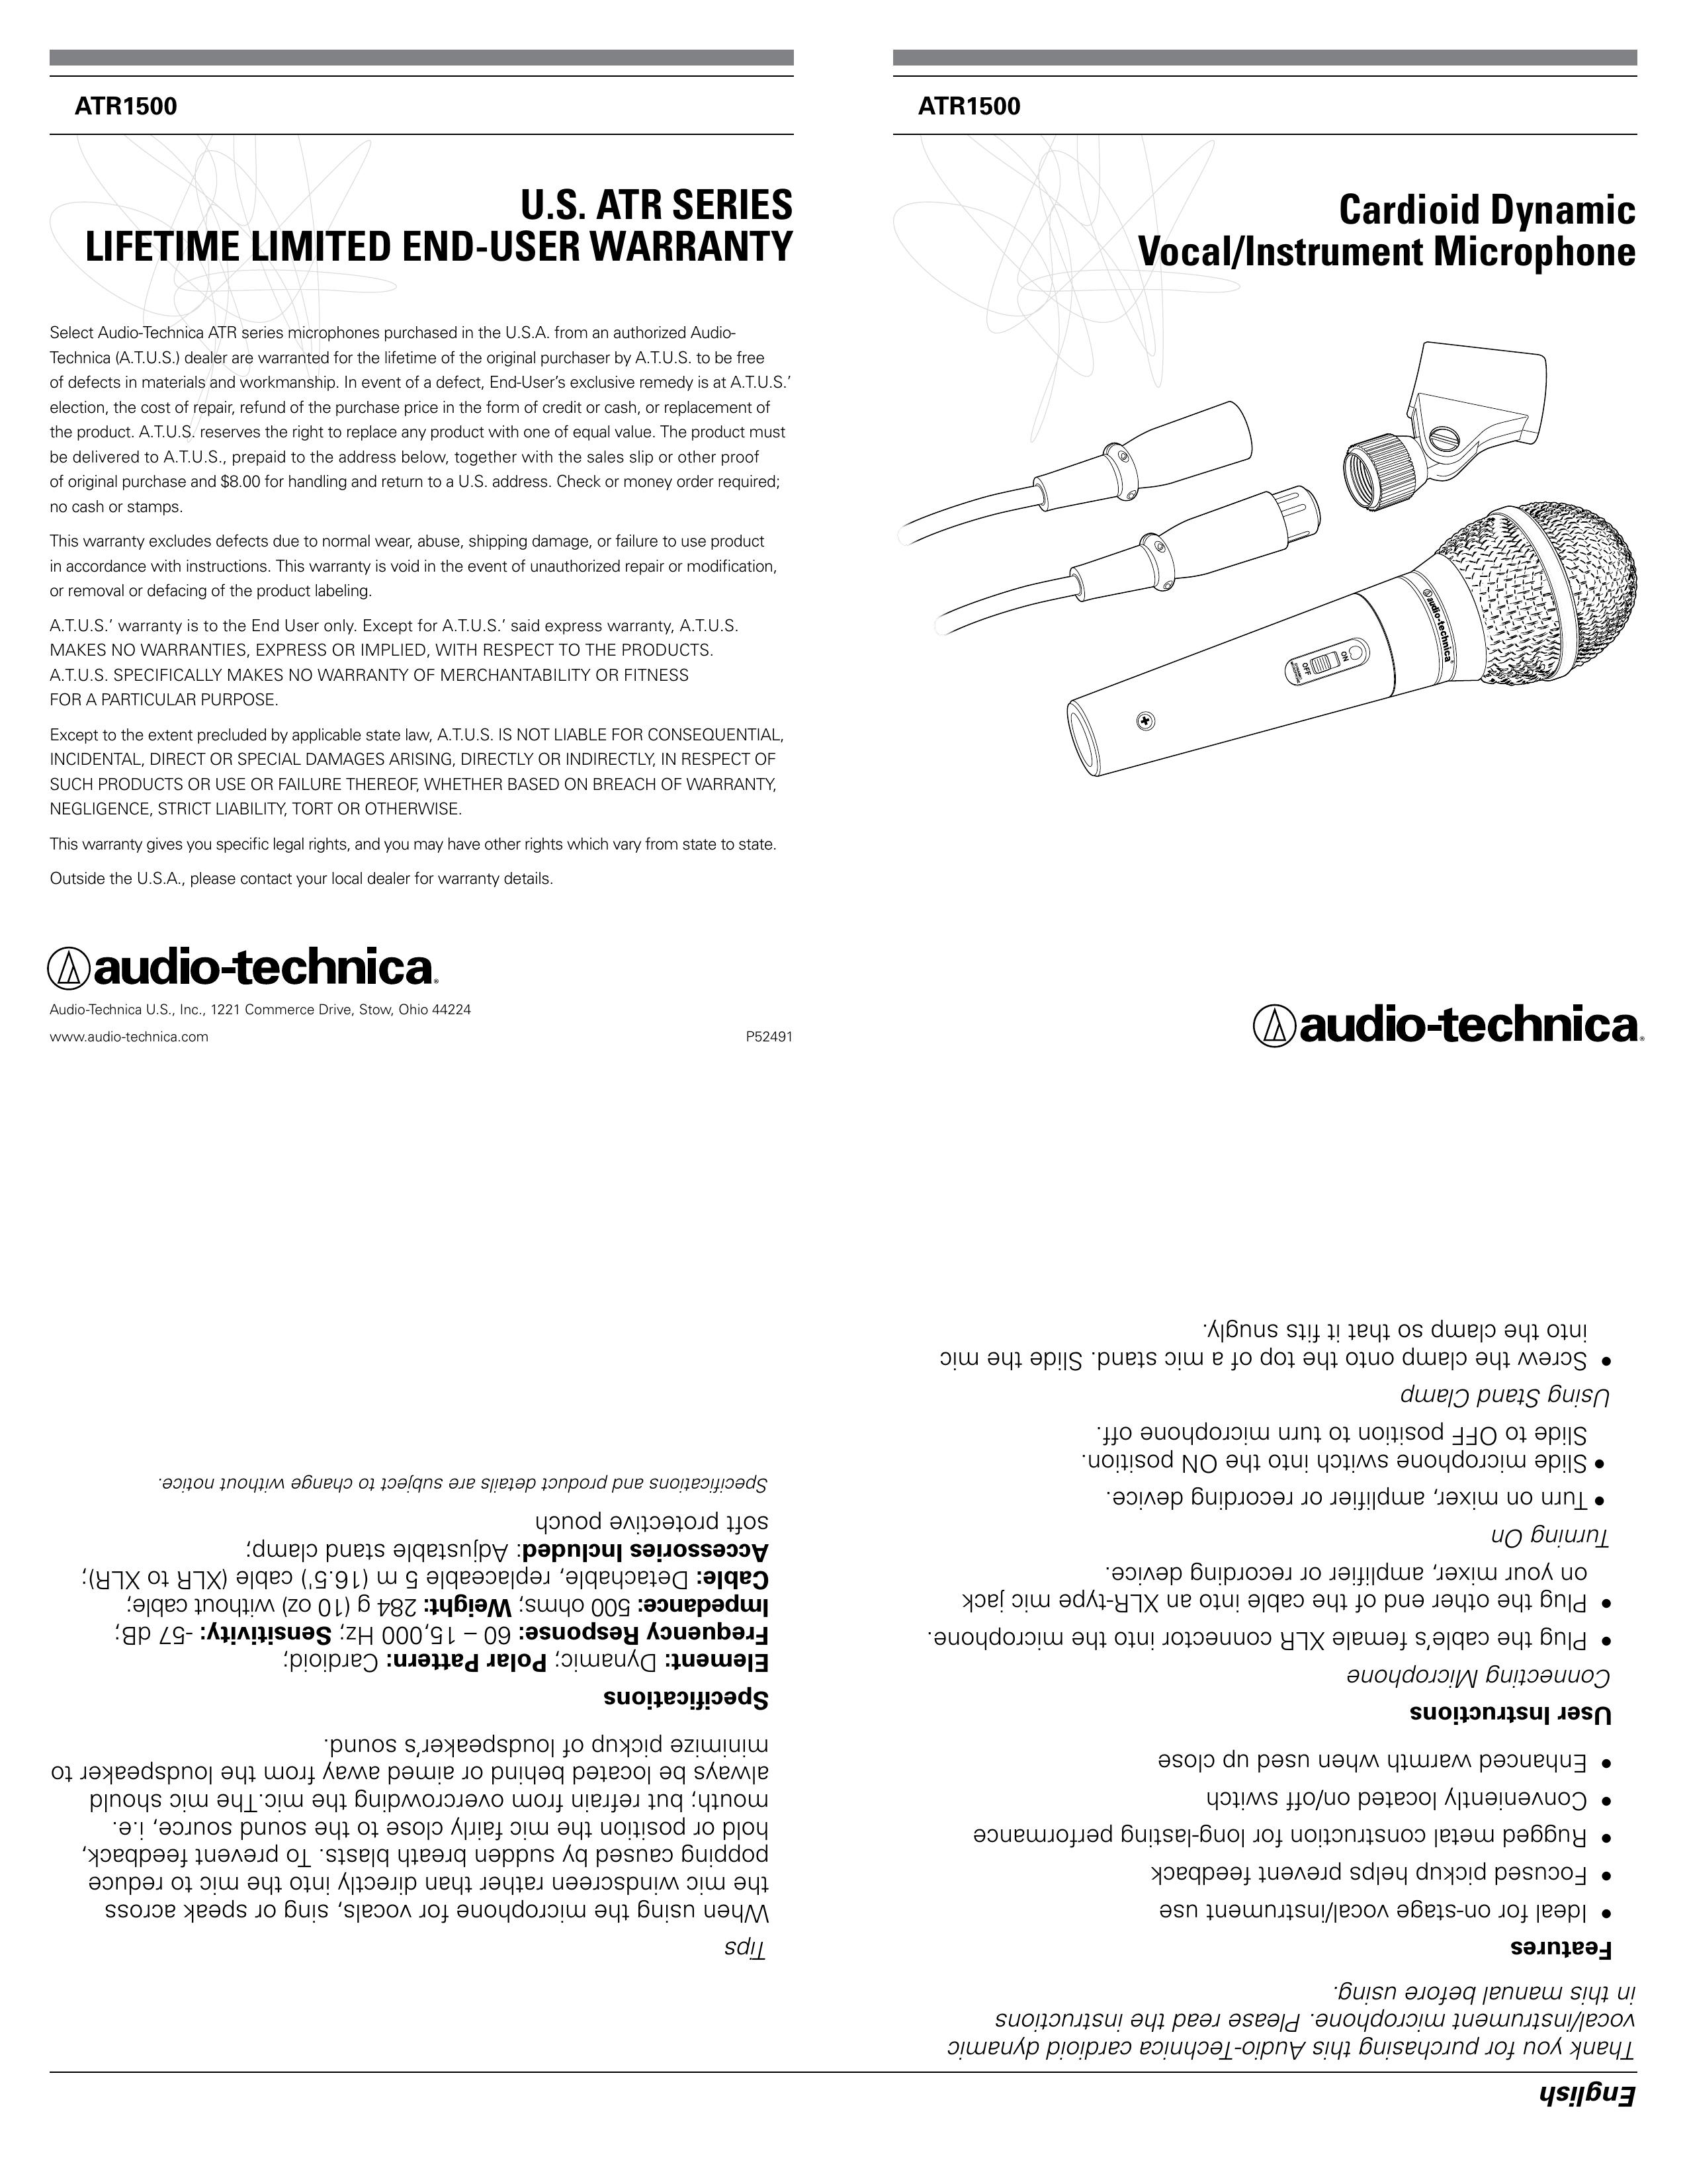 Audio-Technica ATR1500 Microphone User Manual